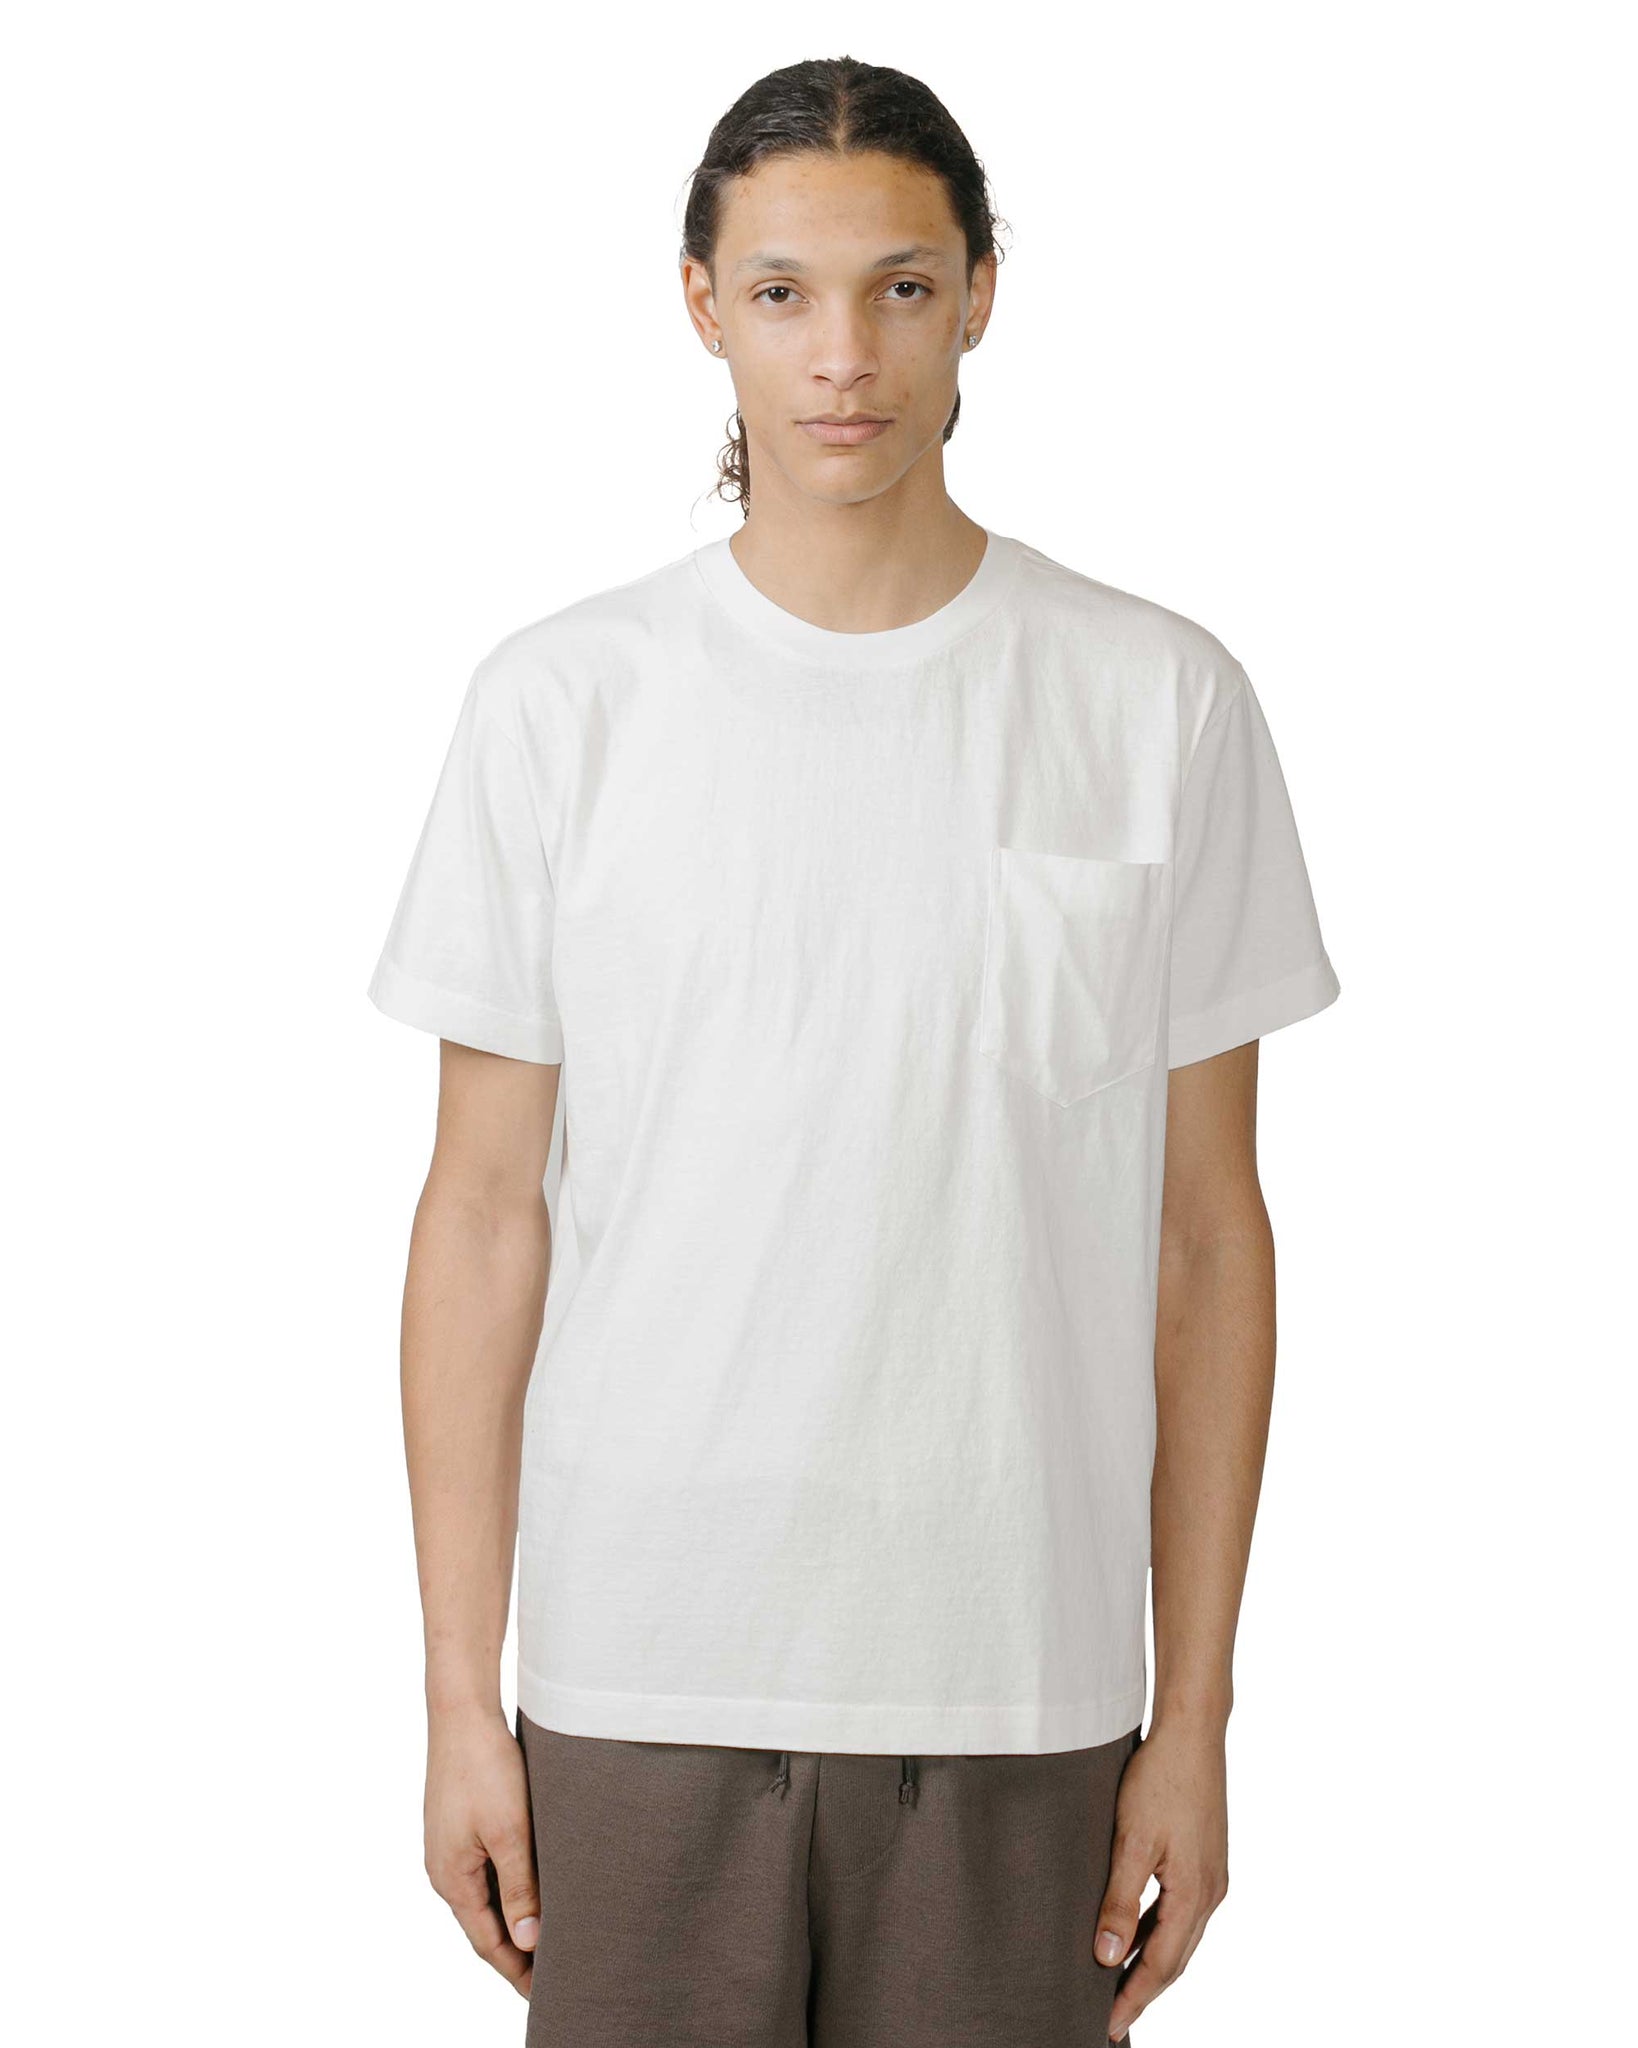 Lady White Co. Balta Pocket T-Shirt White model front